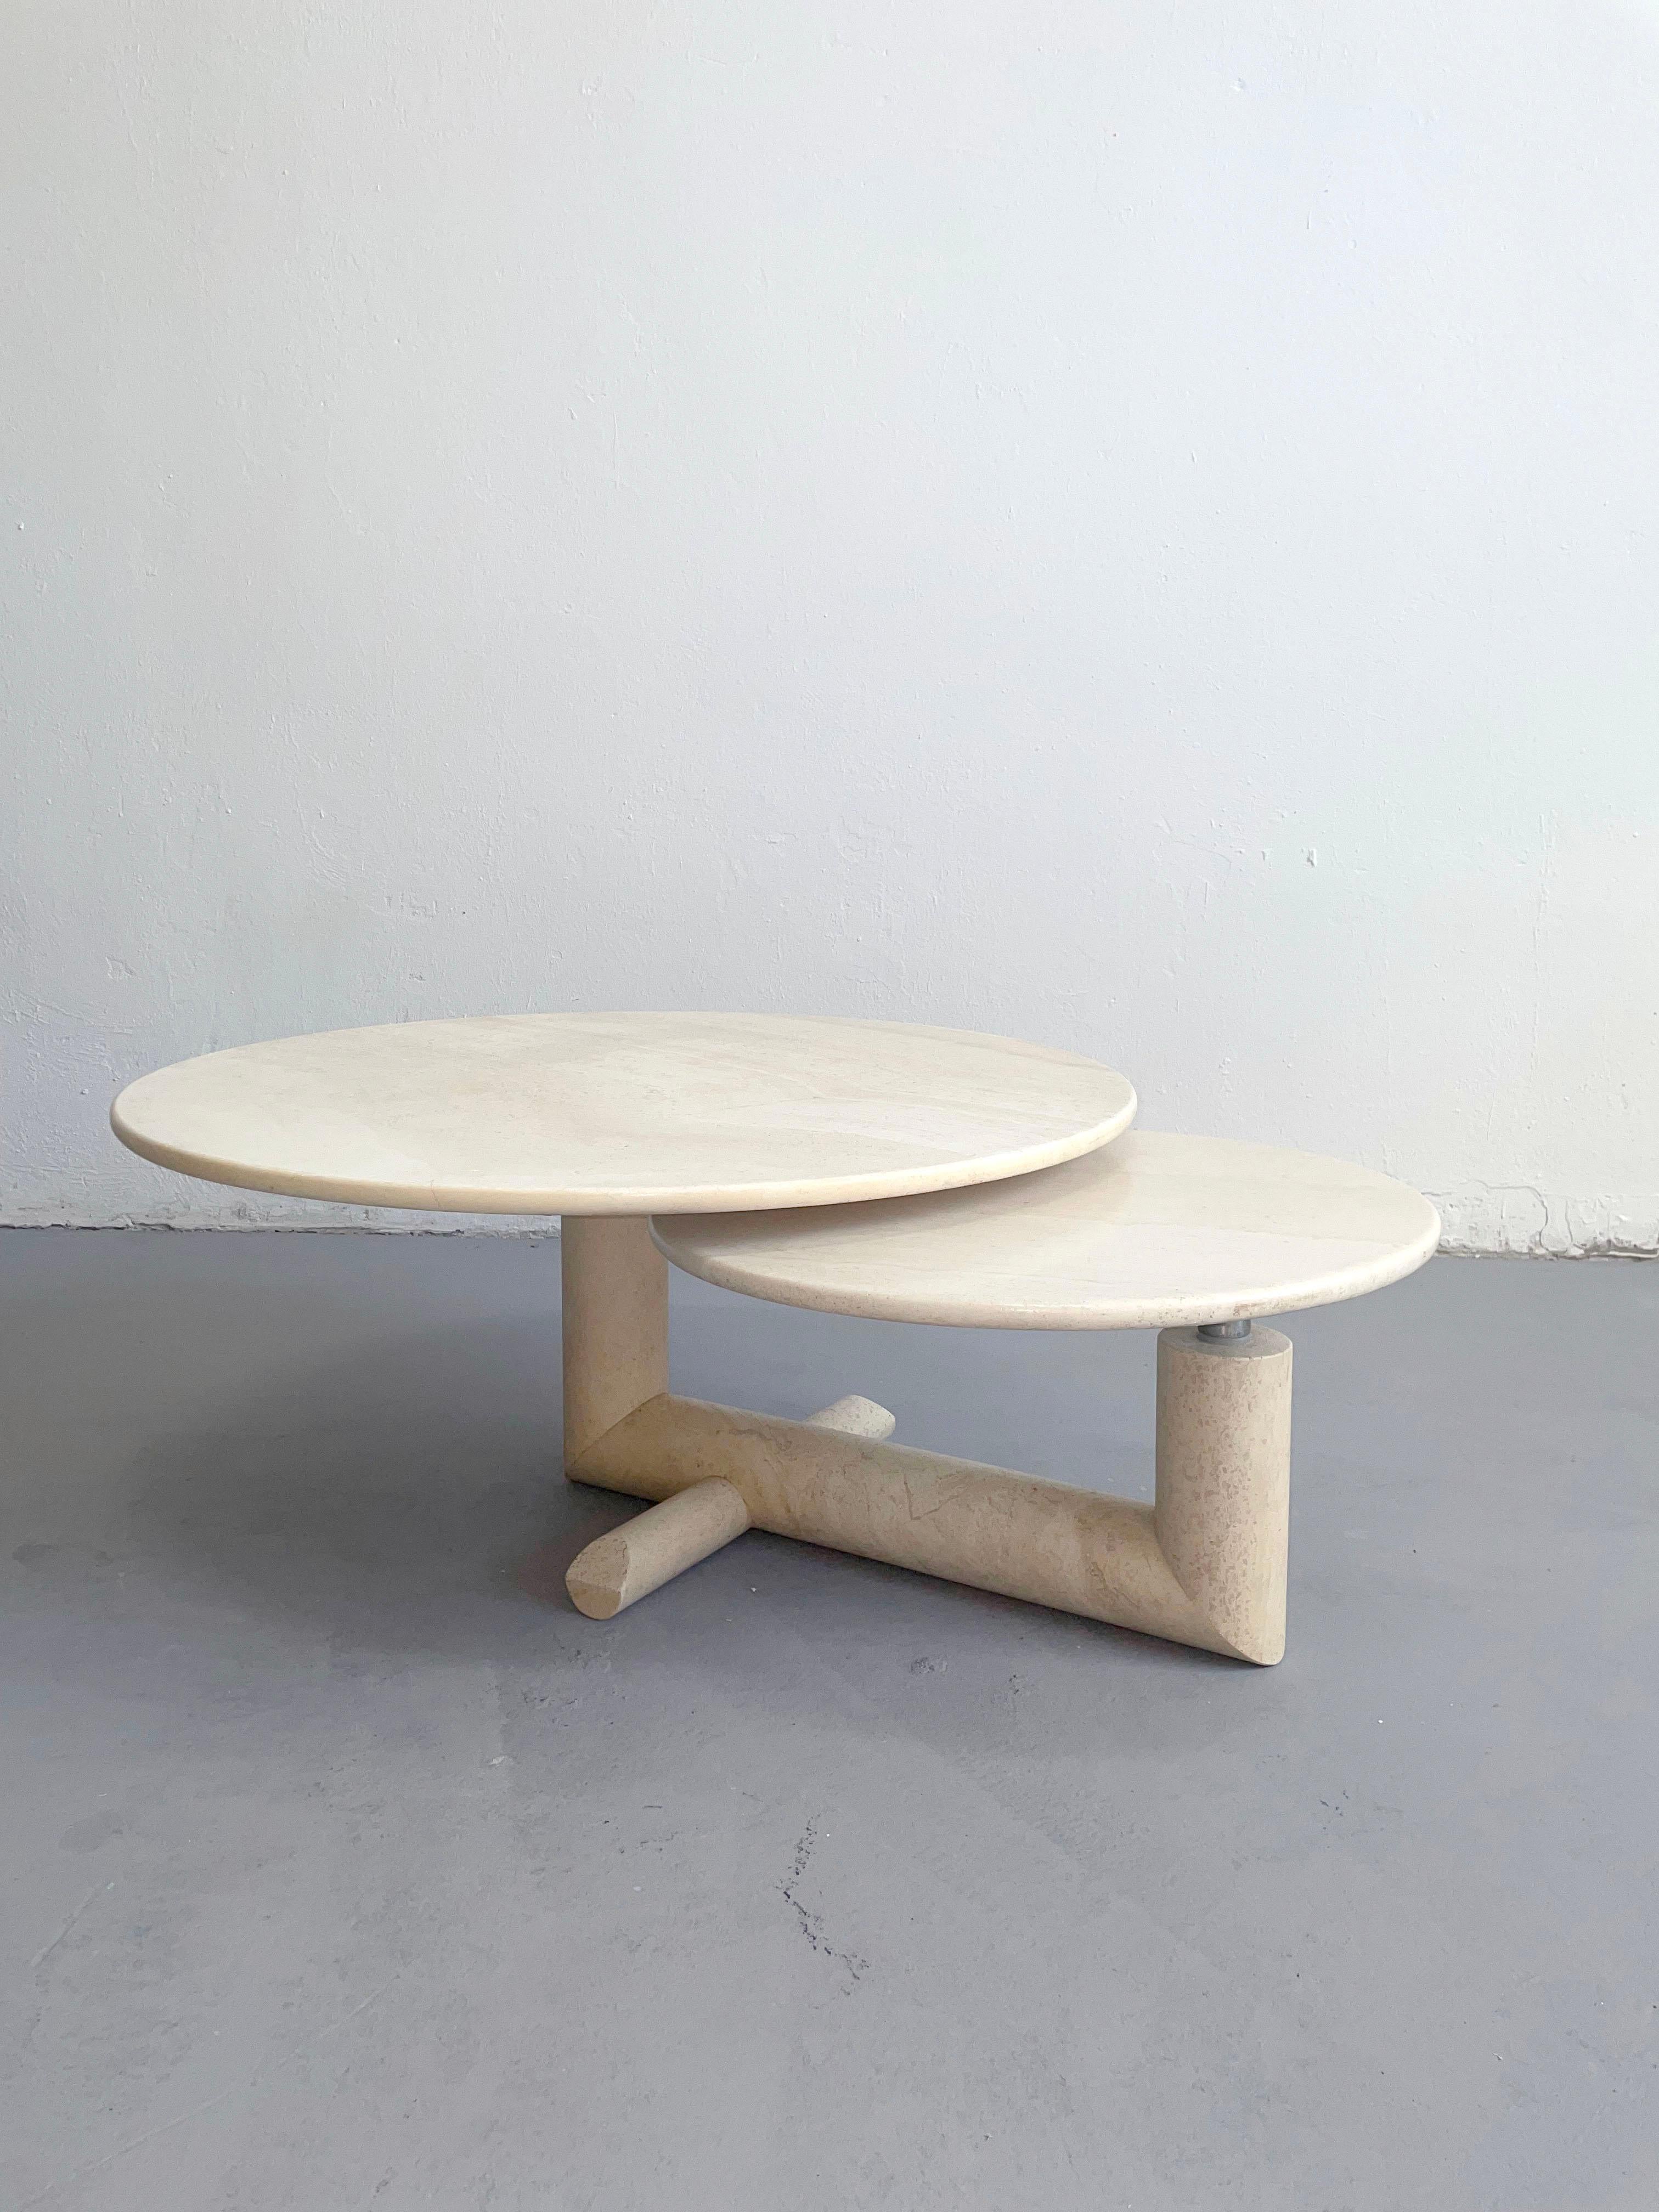 Hand-Crafted Mid-Century Sculptural Italian Travertine Coffee Table, Minimalist Design, 1980s